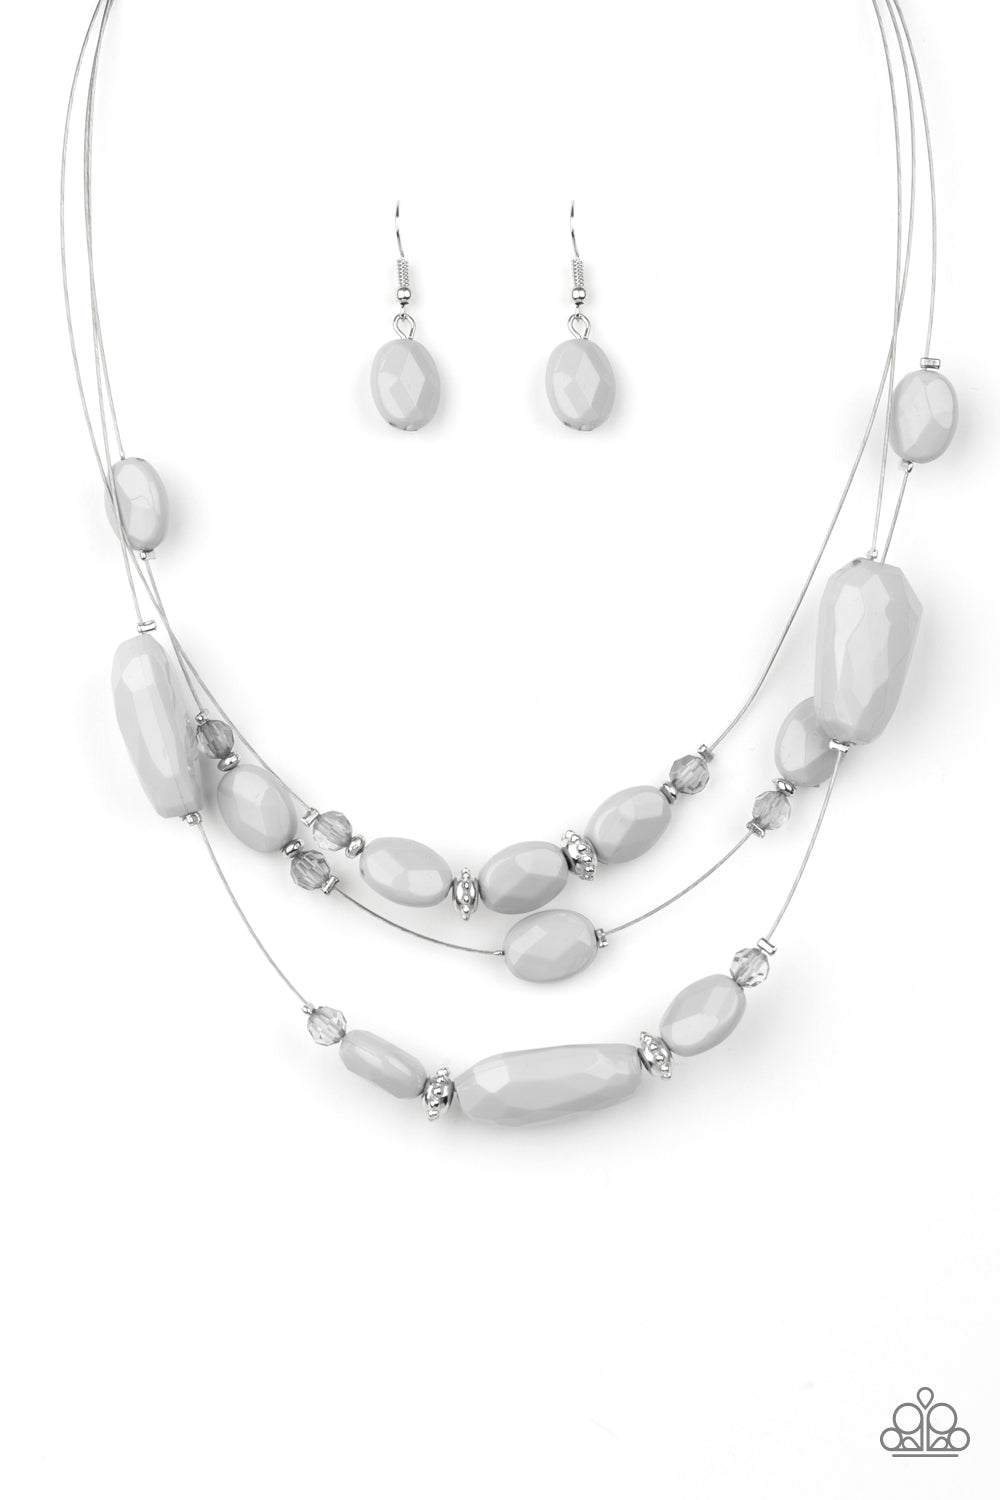 Radiant Reflections - Silver Necklace freeshipping - JewLz4u Gemstone Gallery